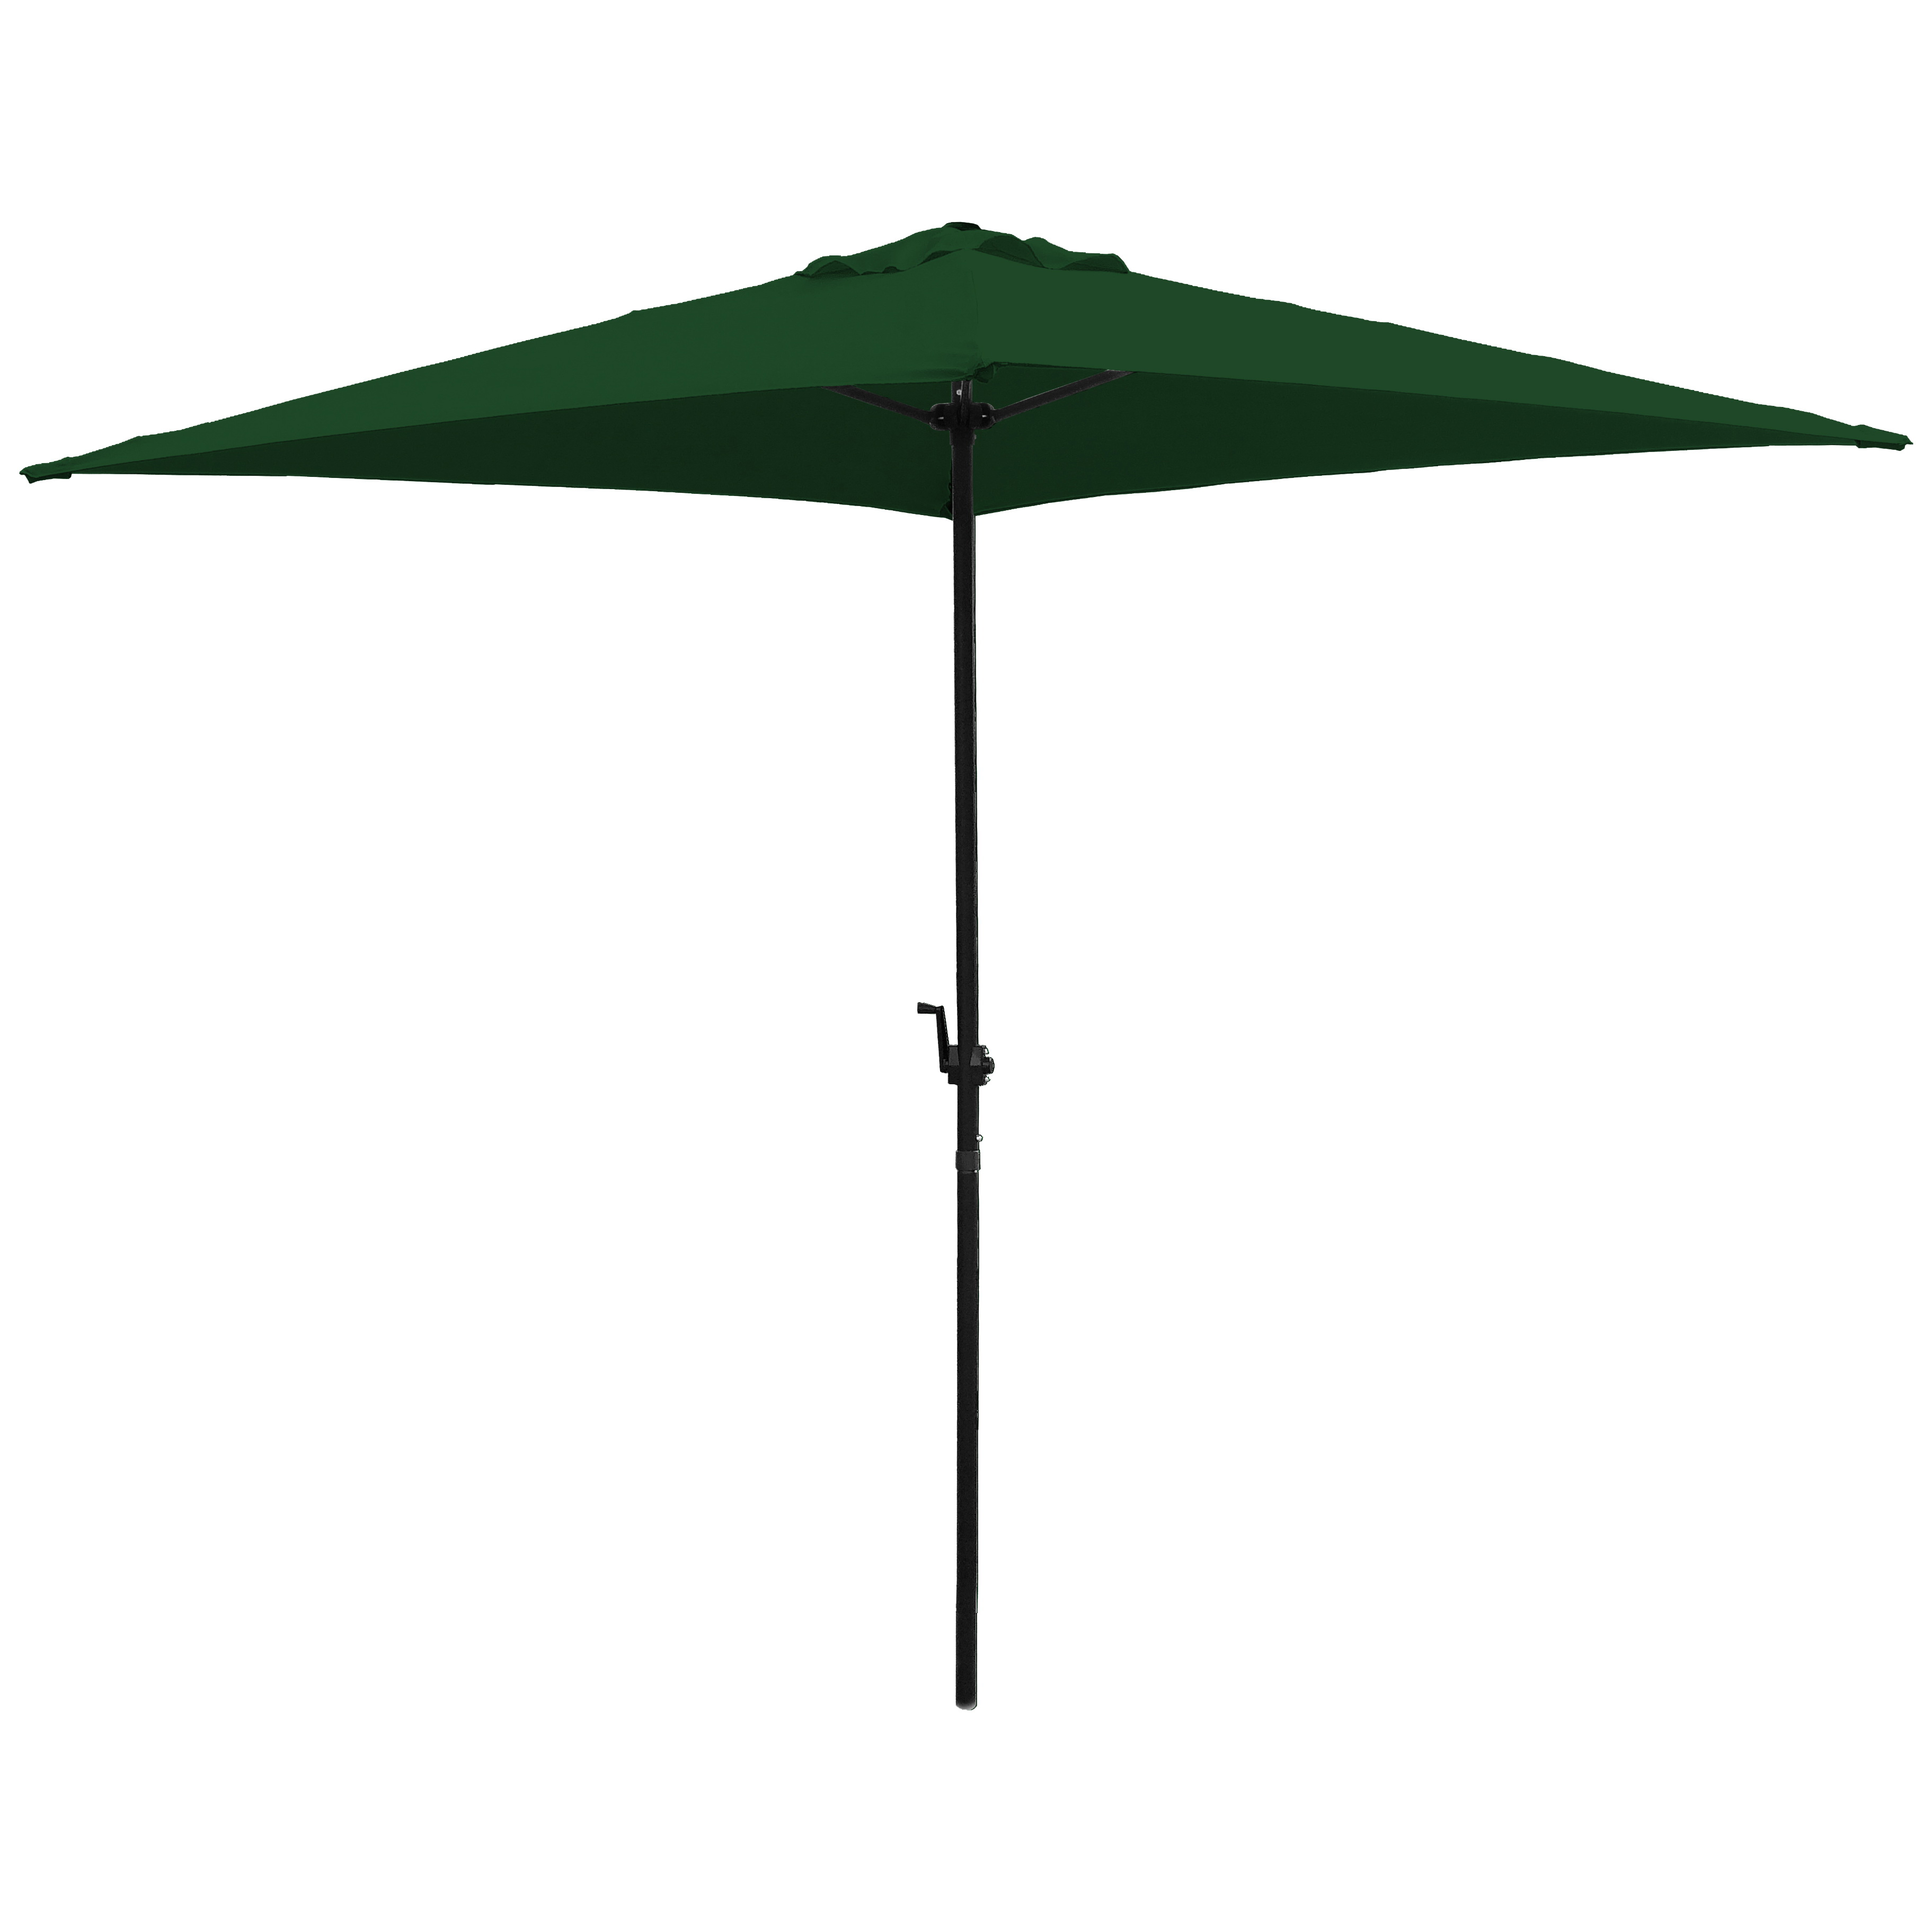 UMQ65BKOBD-01 Market Umbrella, 7.8 ft H, 6.5 ft W Canopy, 6.5 ft L Canopy, Square Canopy